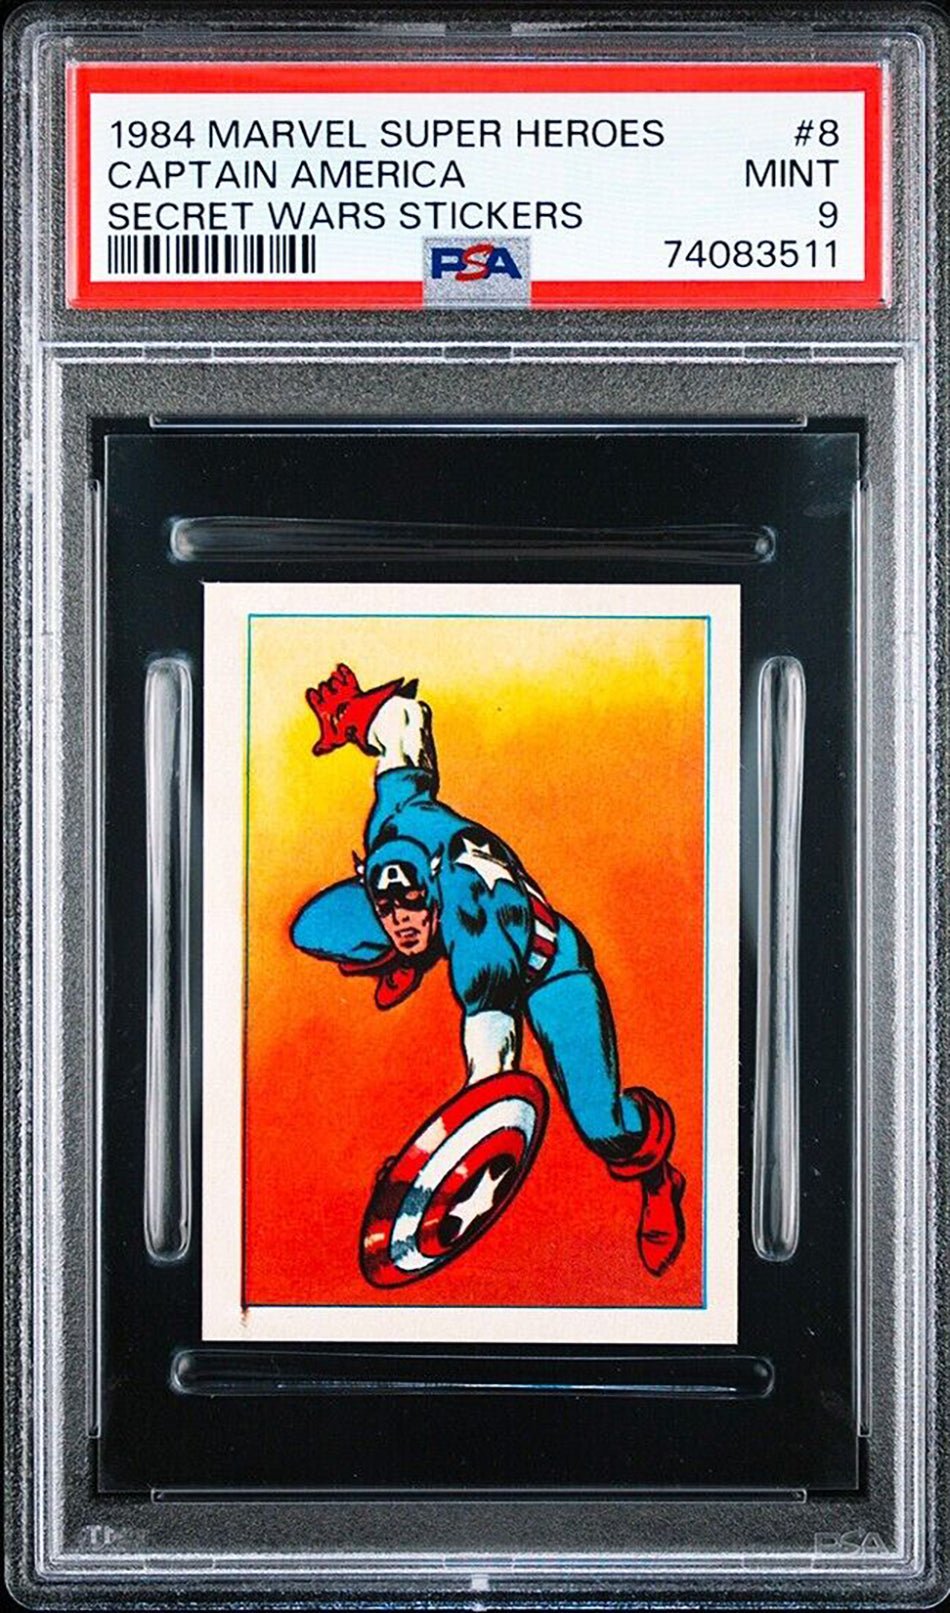 CAPTAIN AMERICA PSA 9 1984 Marvel Super Heroes Secret Wars Sticker #8 Marvel Graded Cards Sticker - Hobby Gems